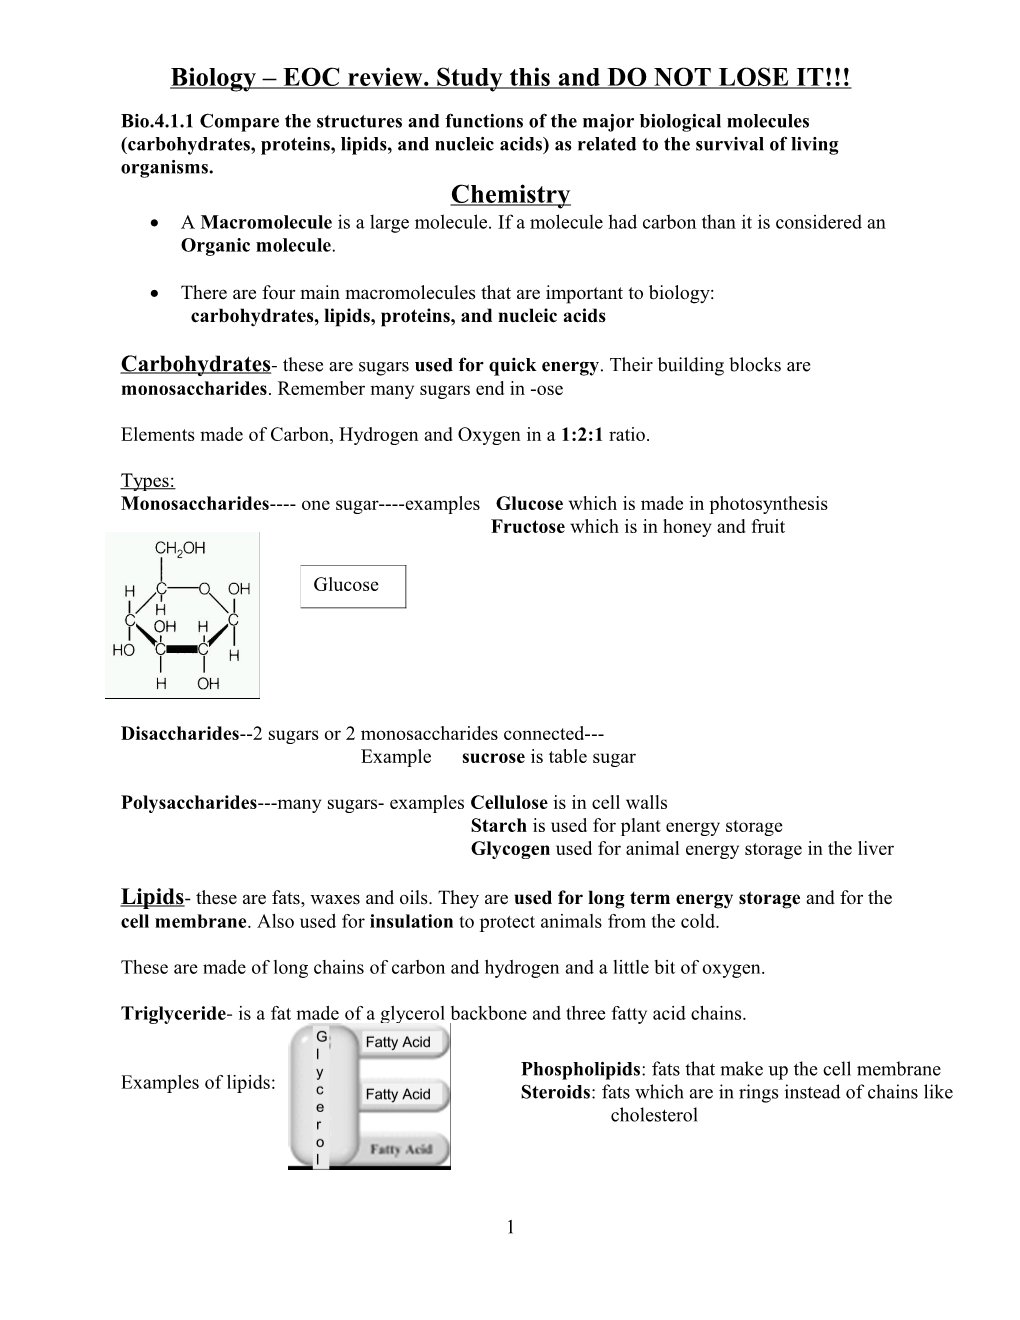 Biology Essential Standard 4